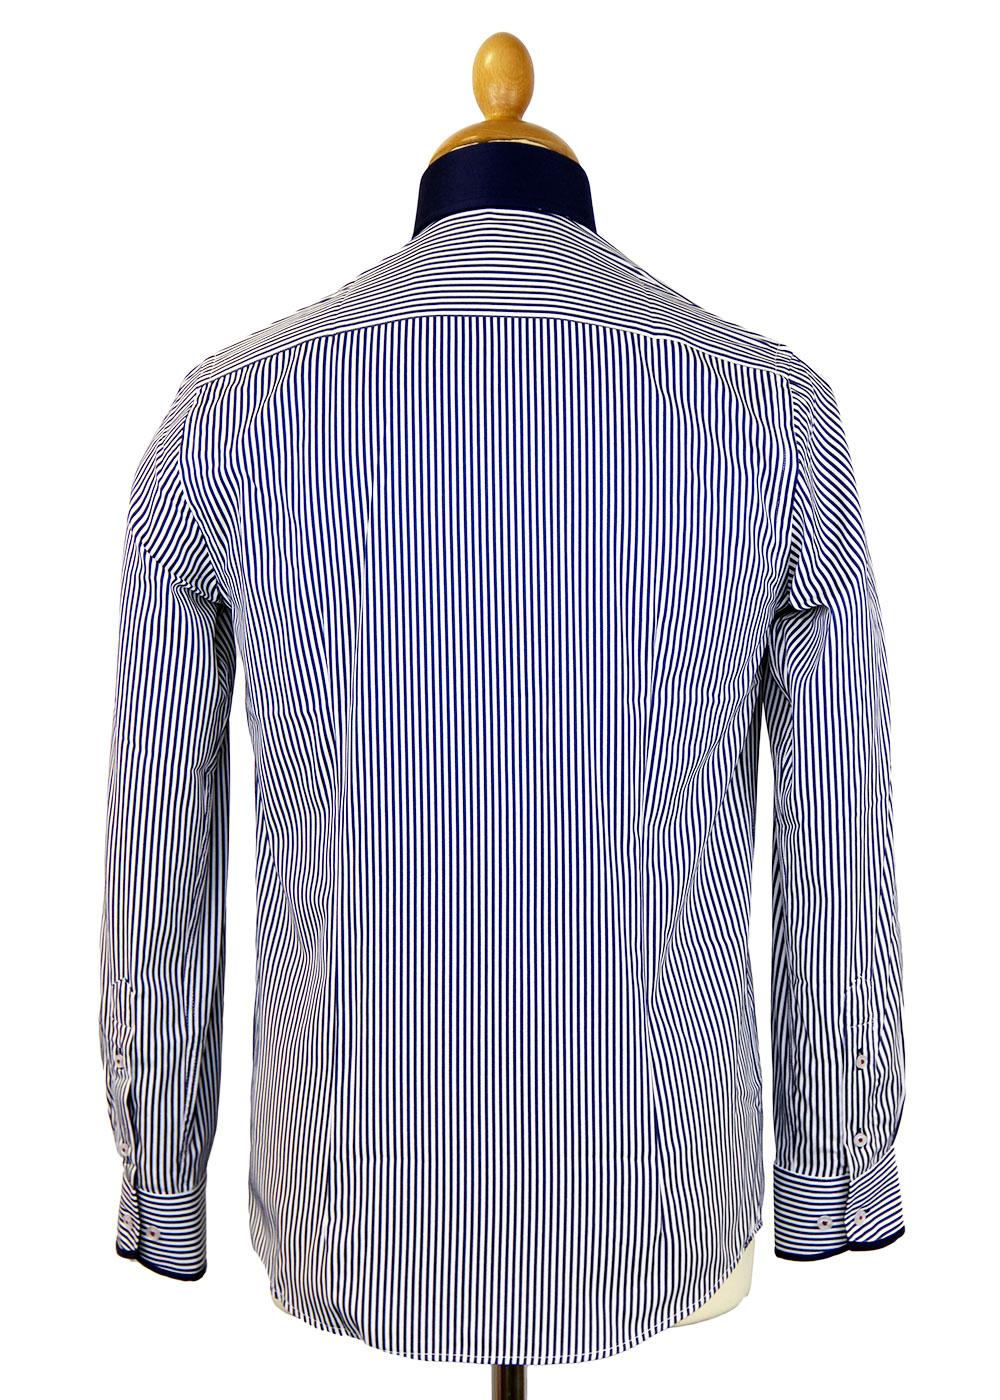 GUIDE LONDON Retro 60s Mod Candy Stripe Big Collar Shirt in Navy